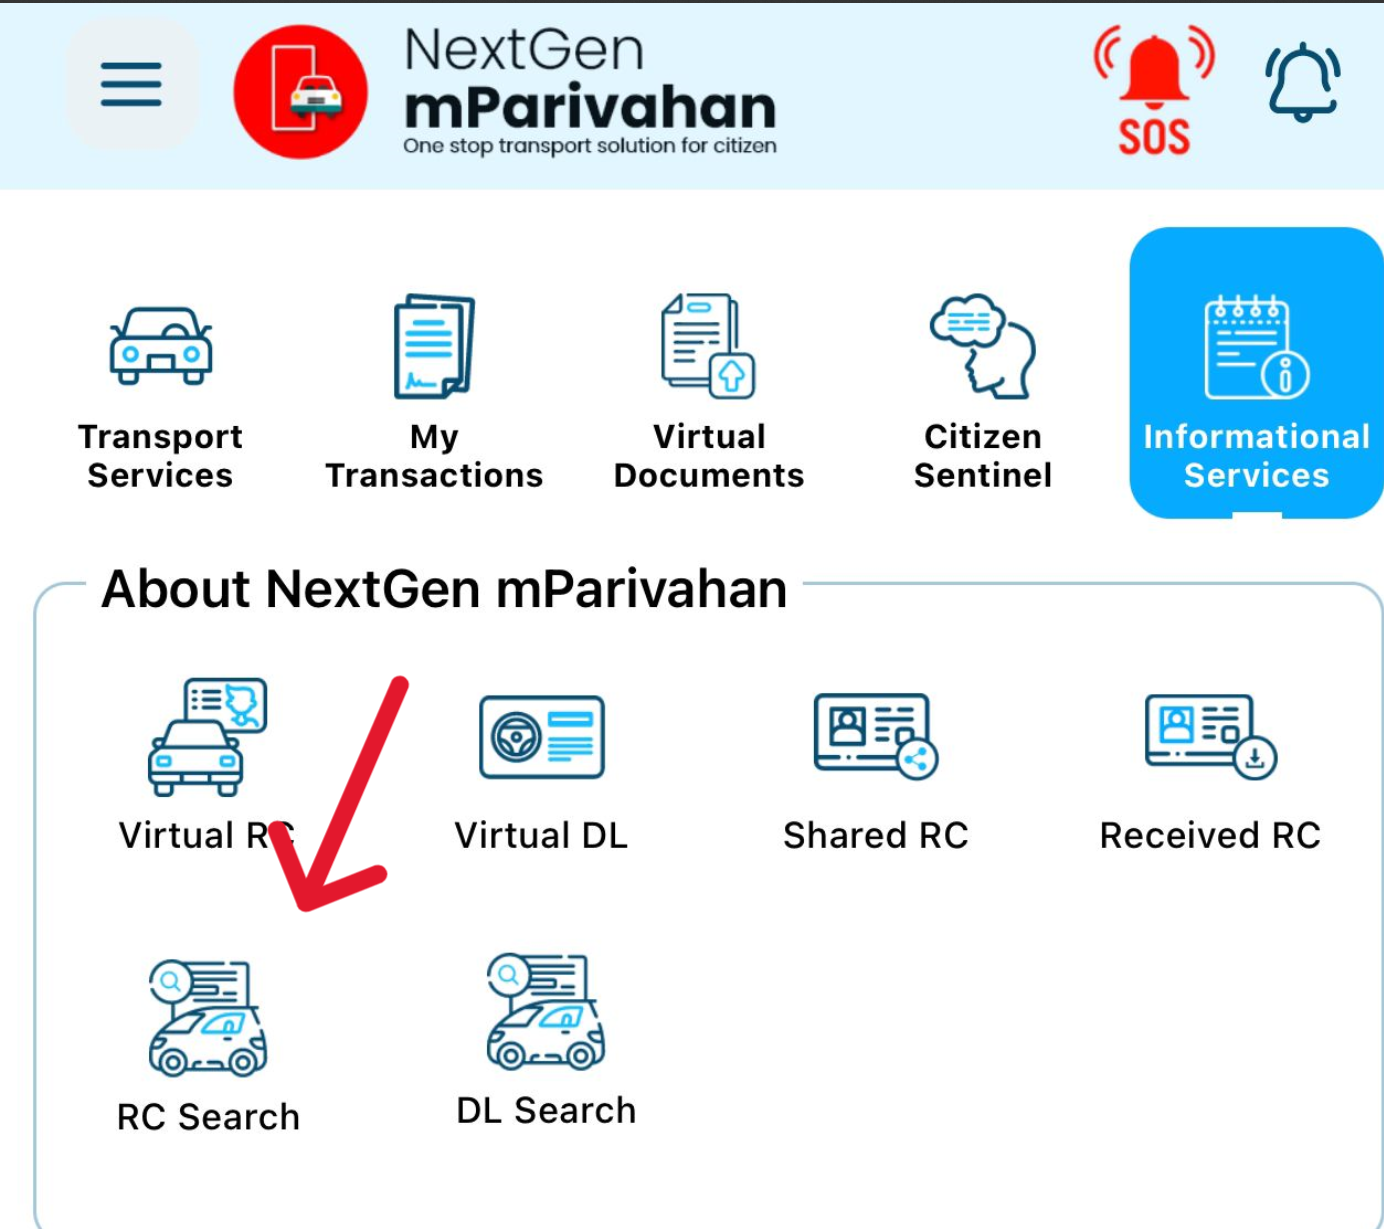 RC Search on mParivahan App